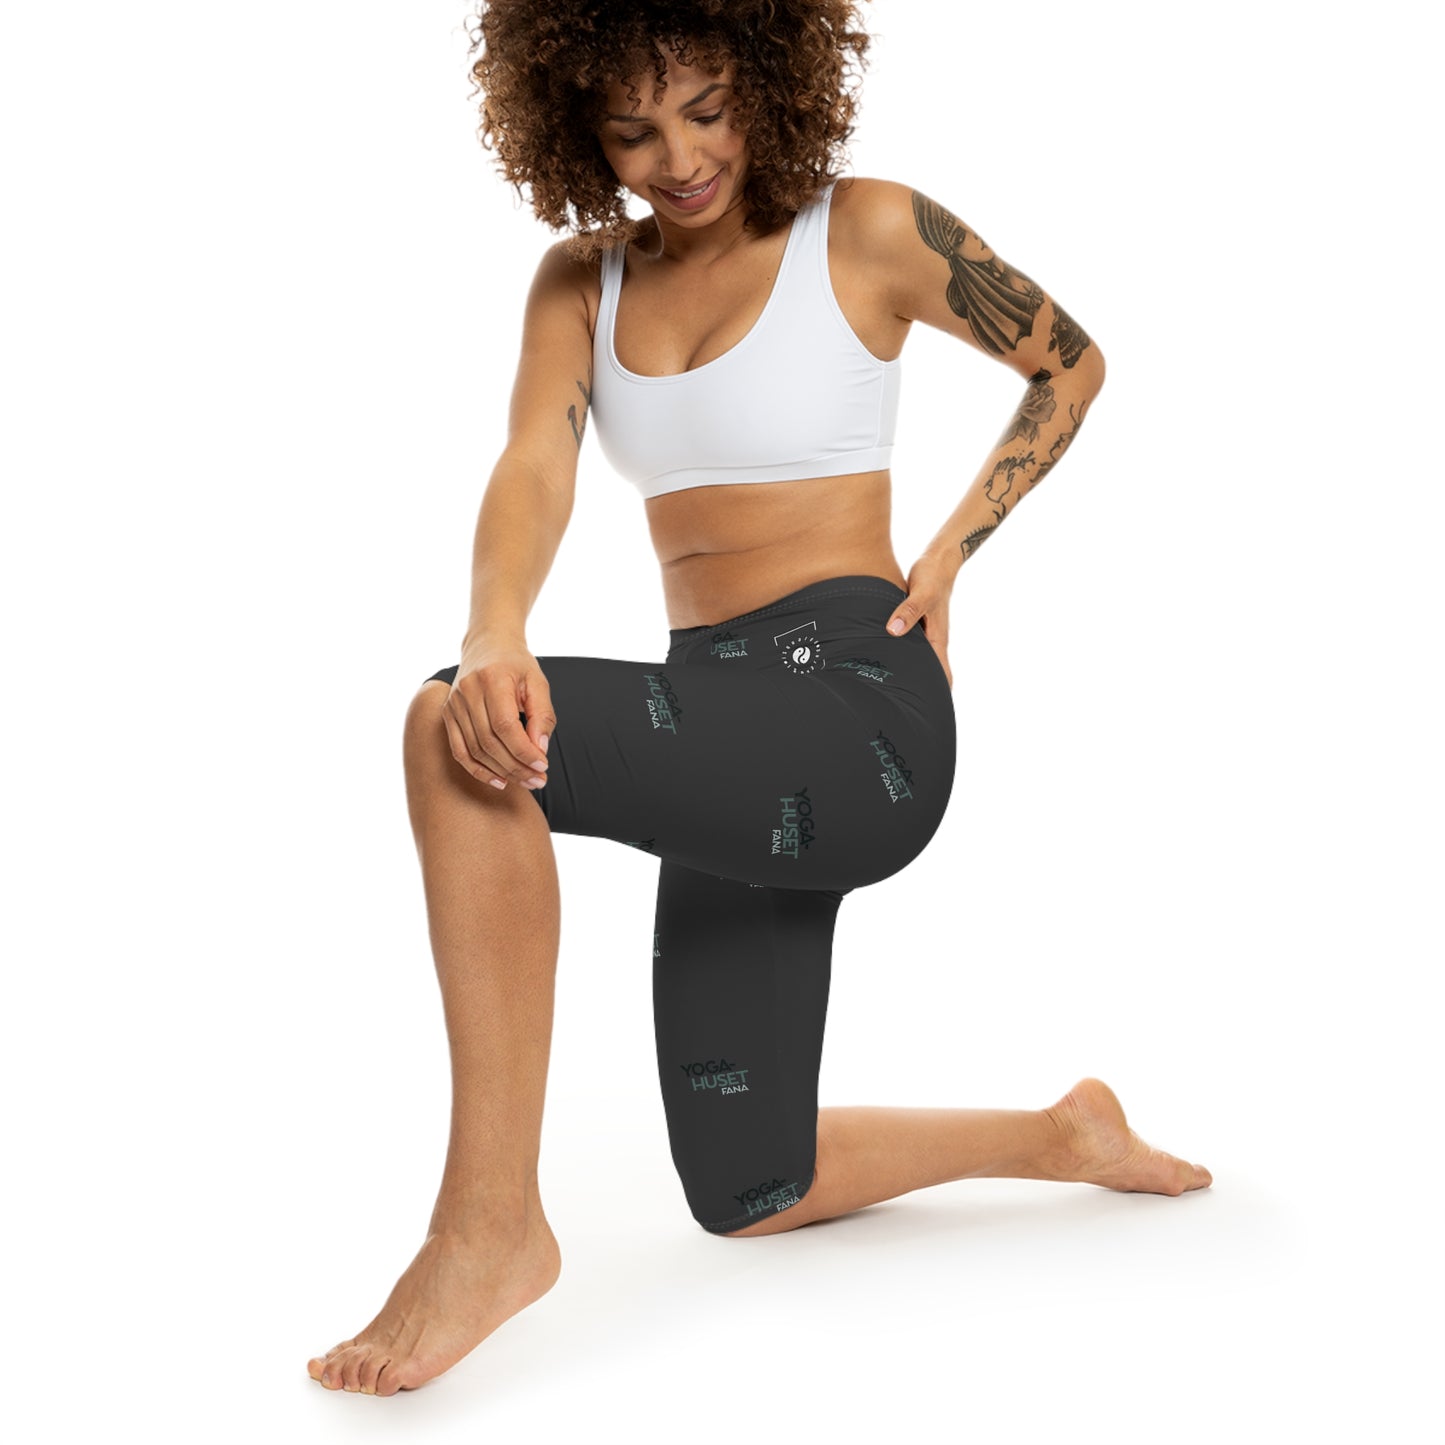 Yoga Huset Fana Collab 01 - Capri Shorts